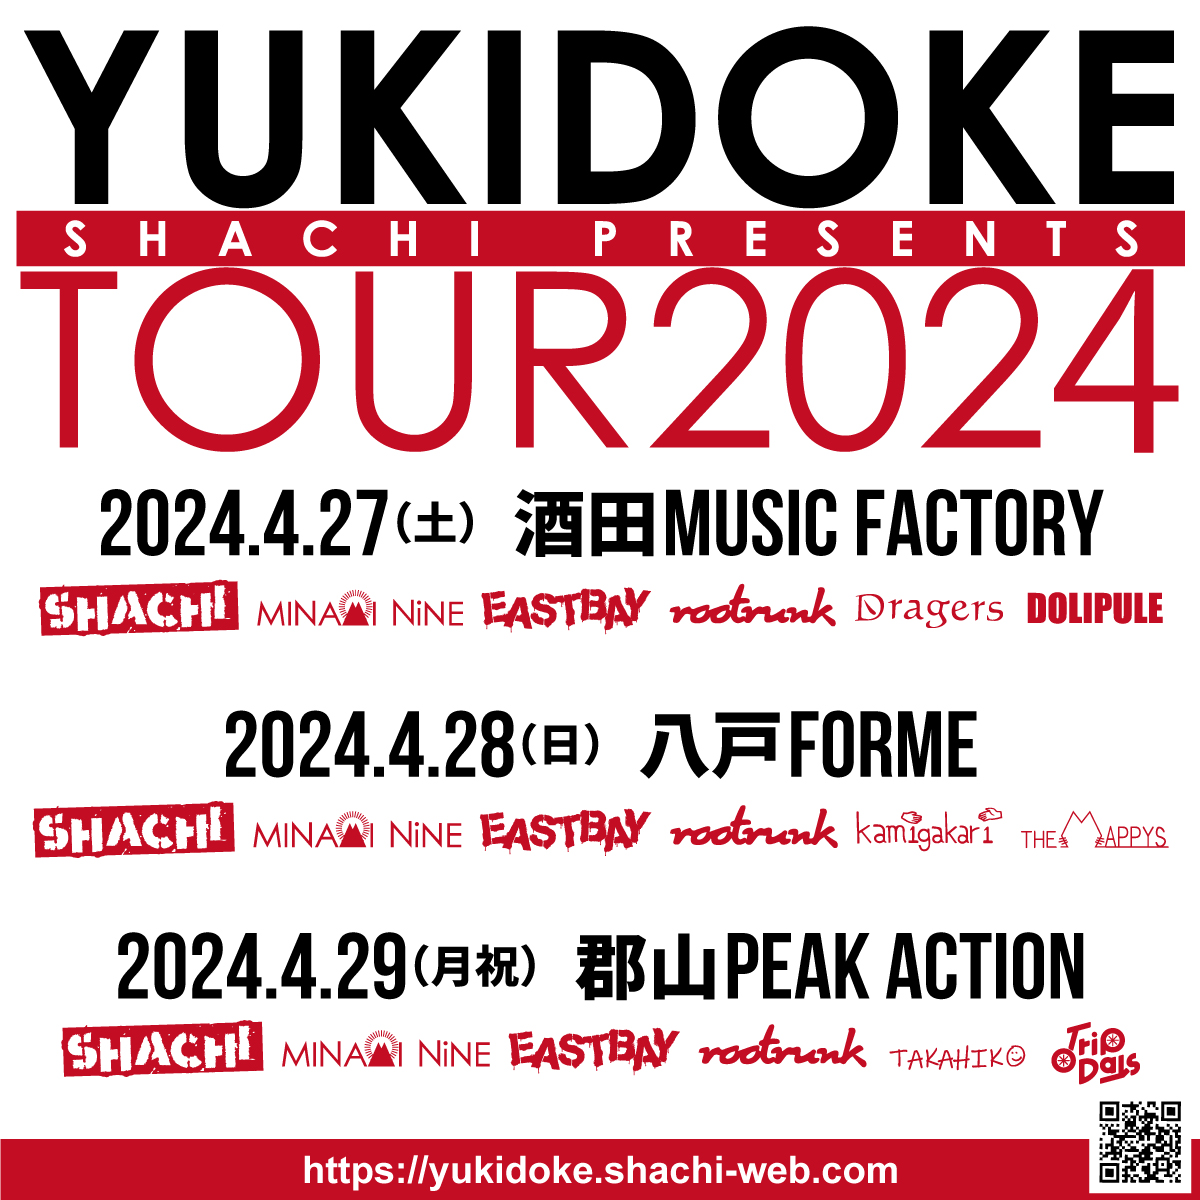 SHACHI pre “YUKIDOKE TOUR2024” 酒田の写真